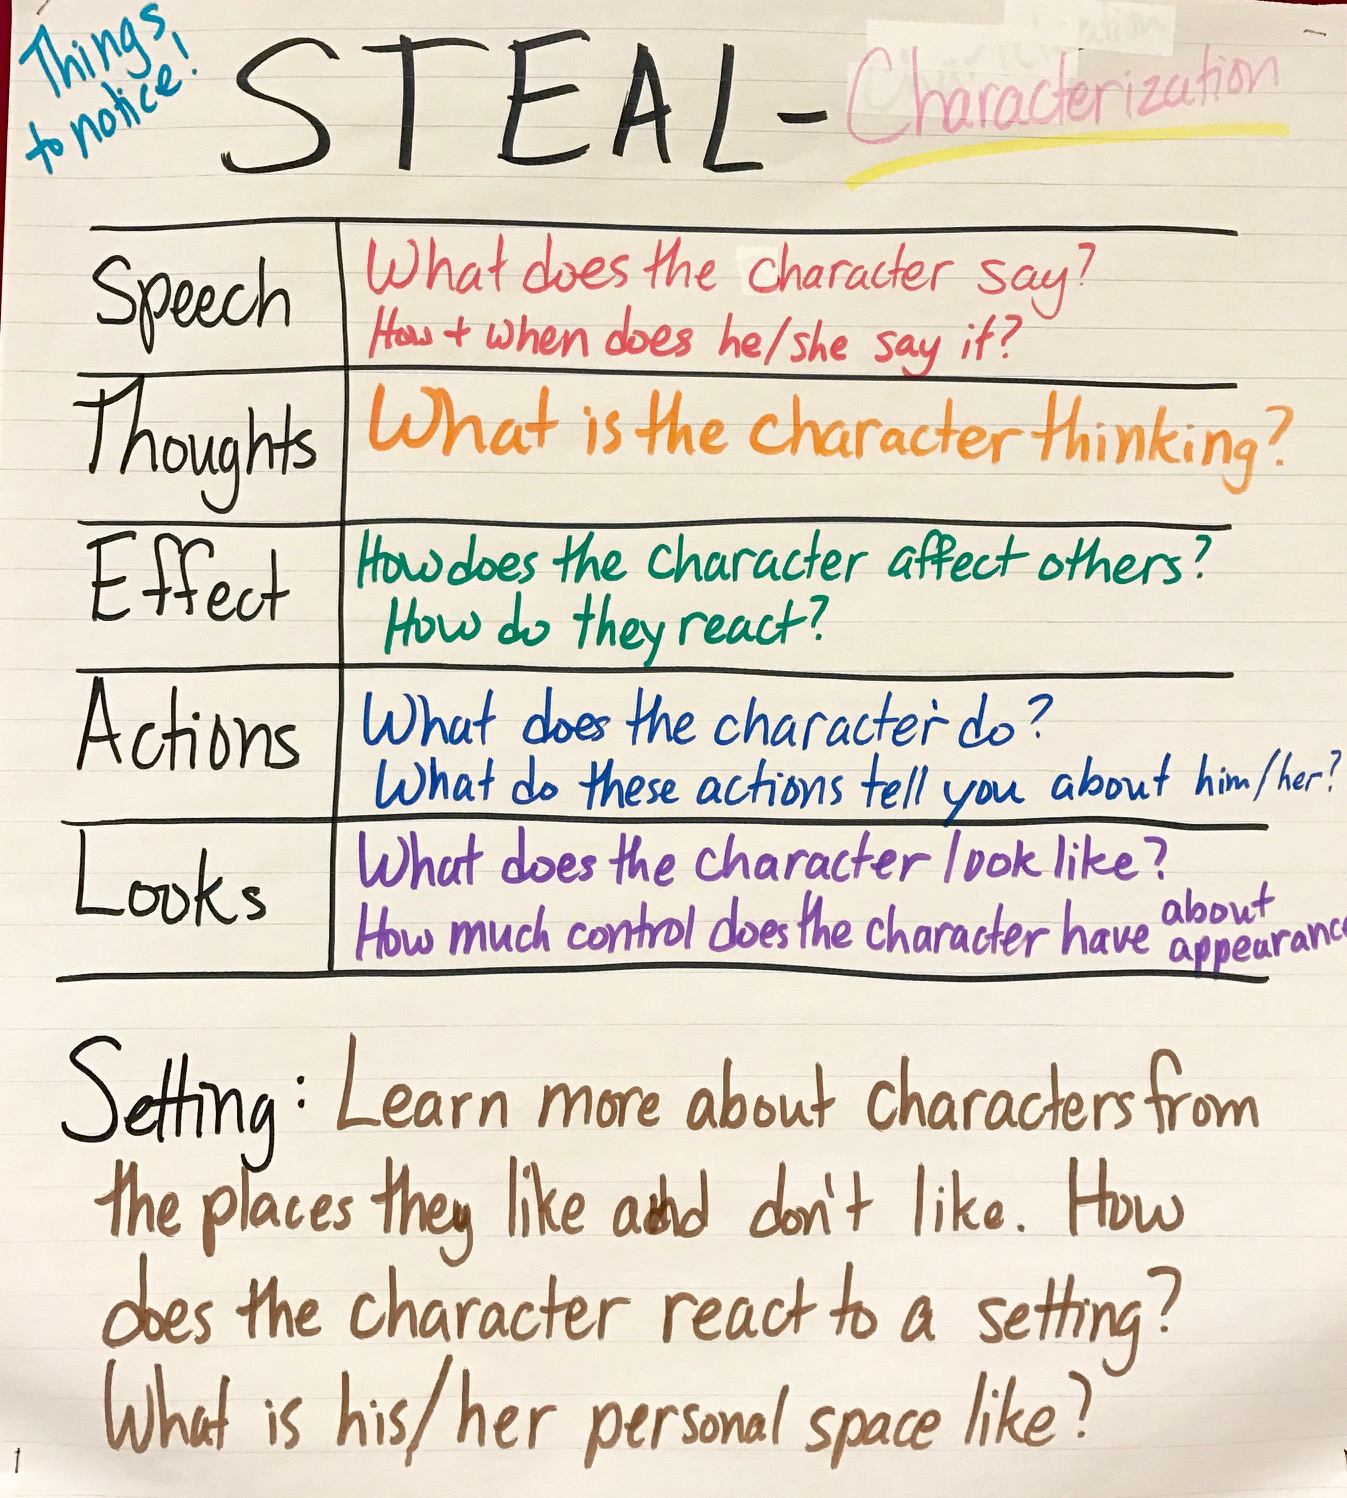 Steal Characterization Chart